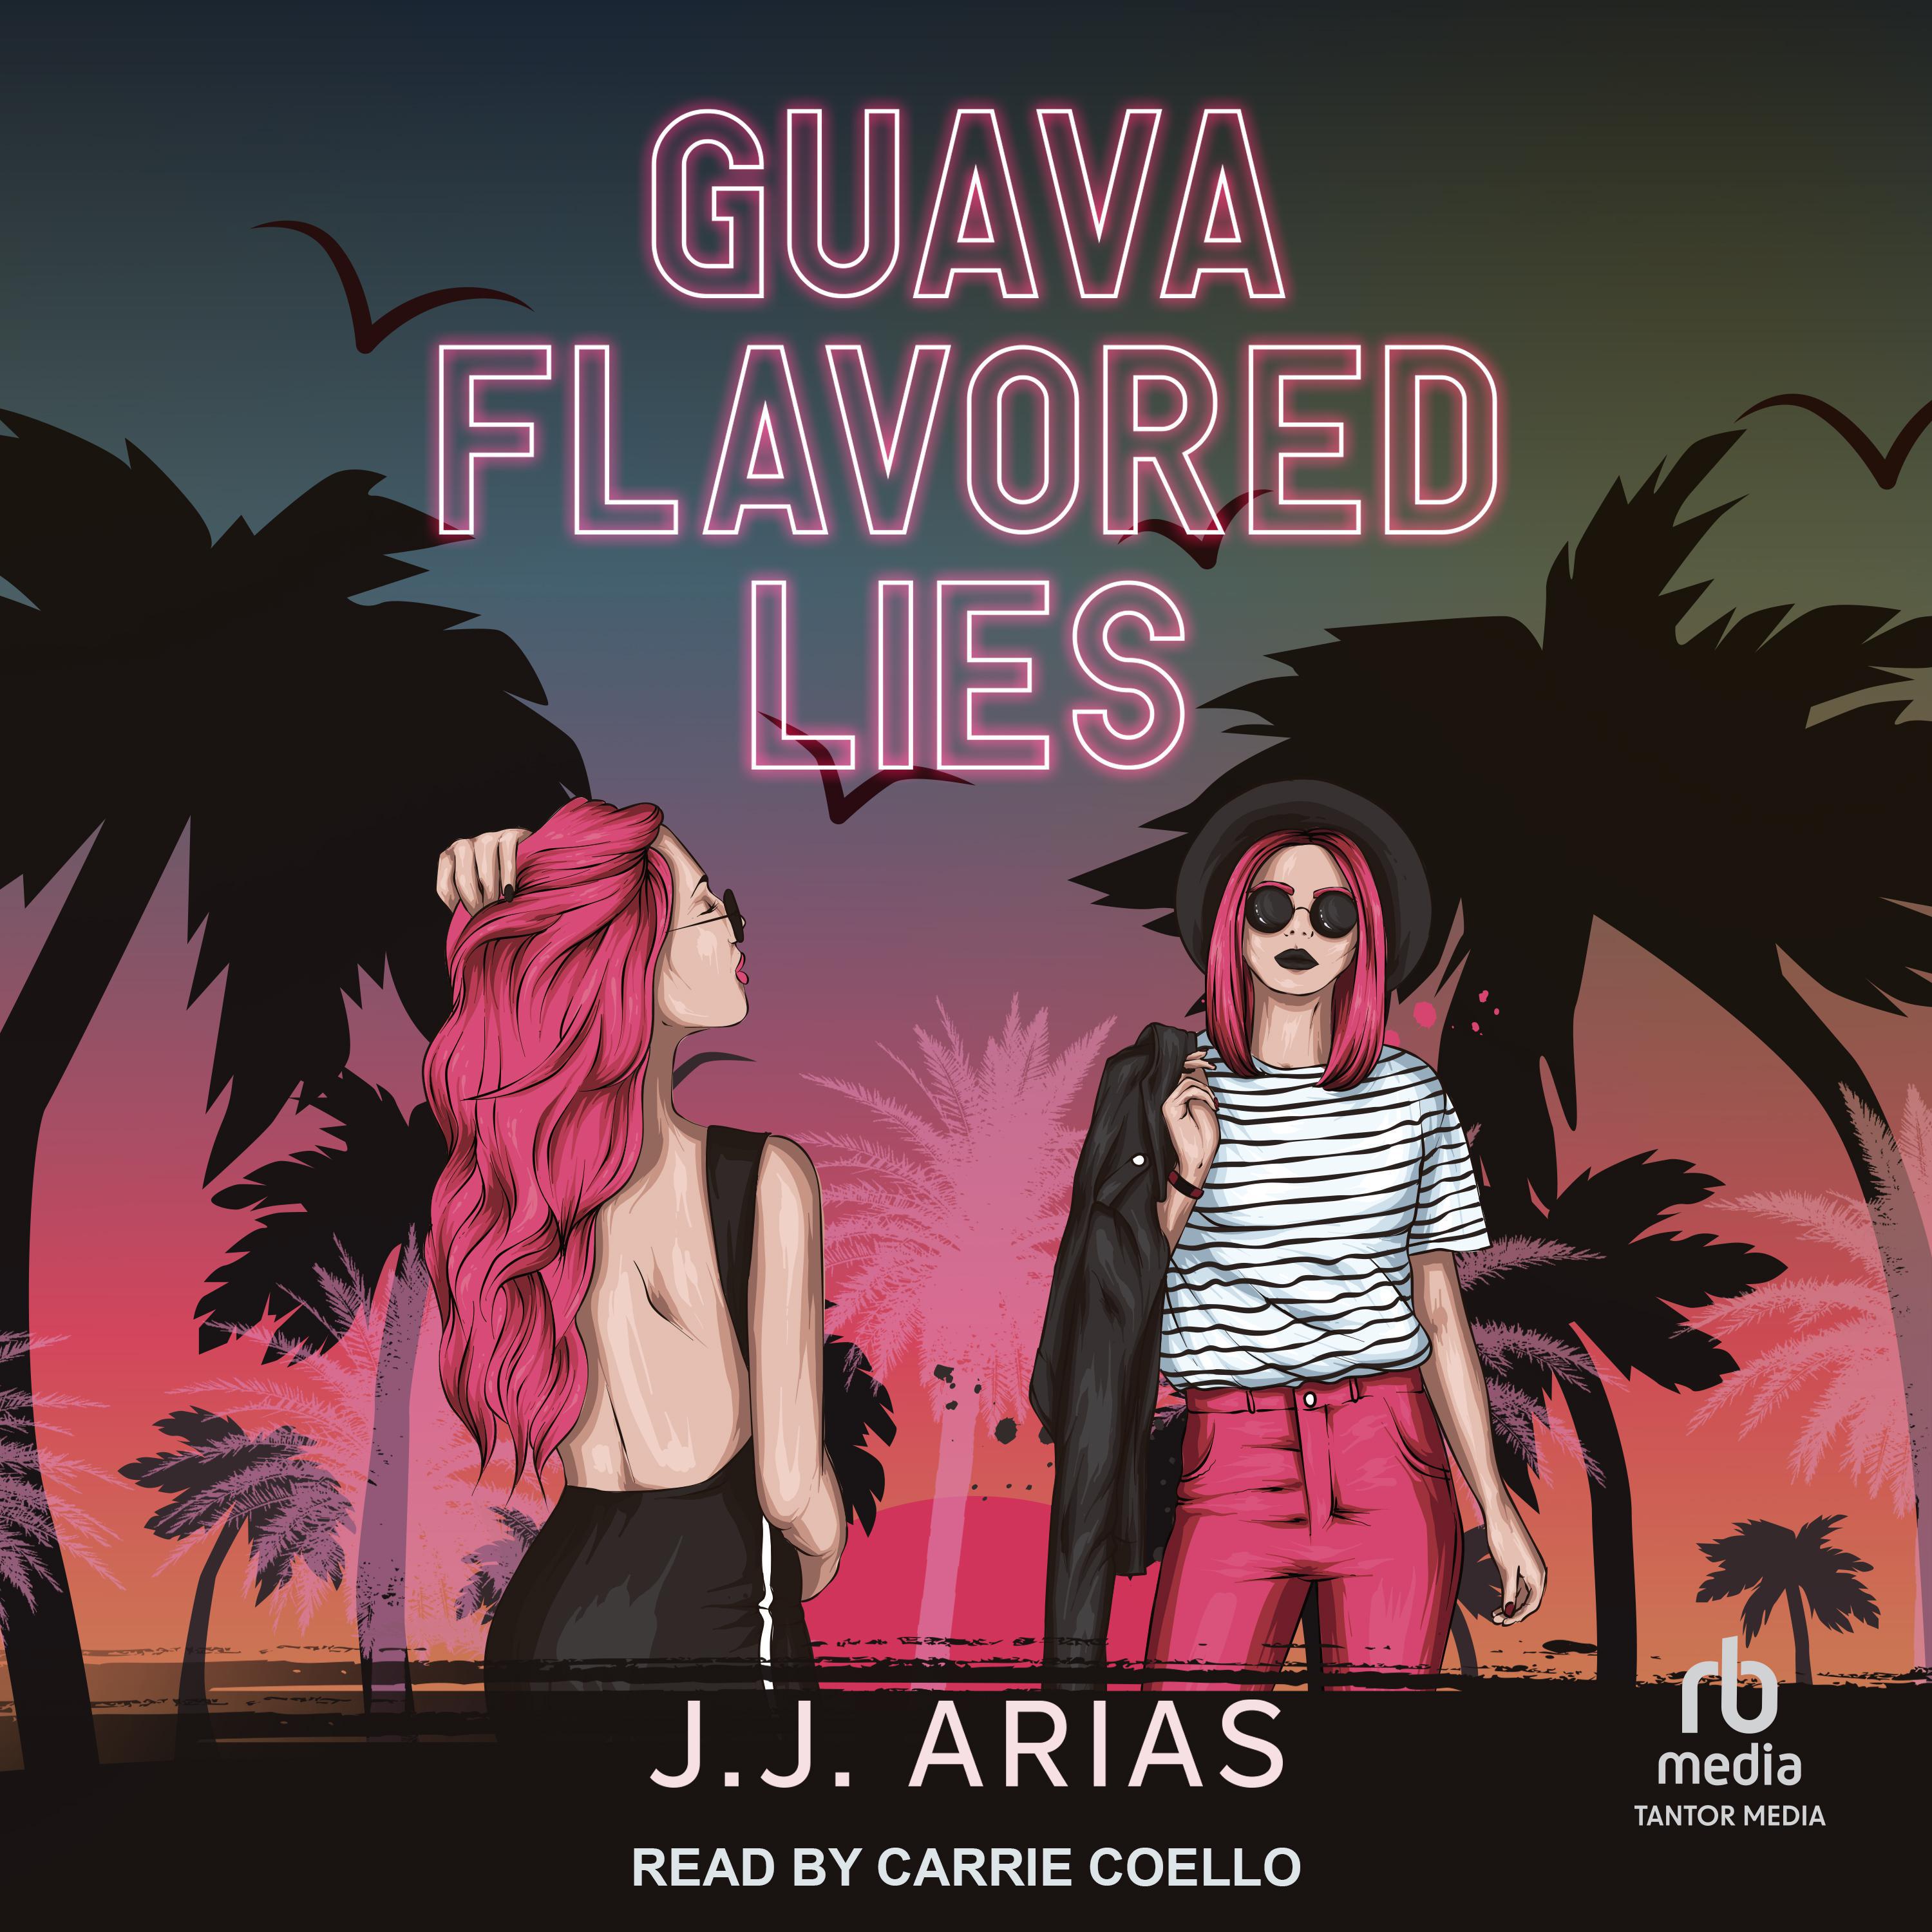 J.J. Arias, Carrie Coello: Guava Flavored Lies (AudiobookFormat, 2022, Tantor Audio)